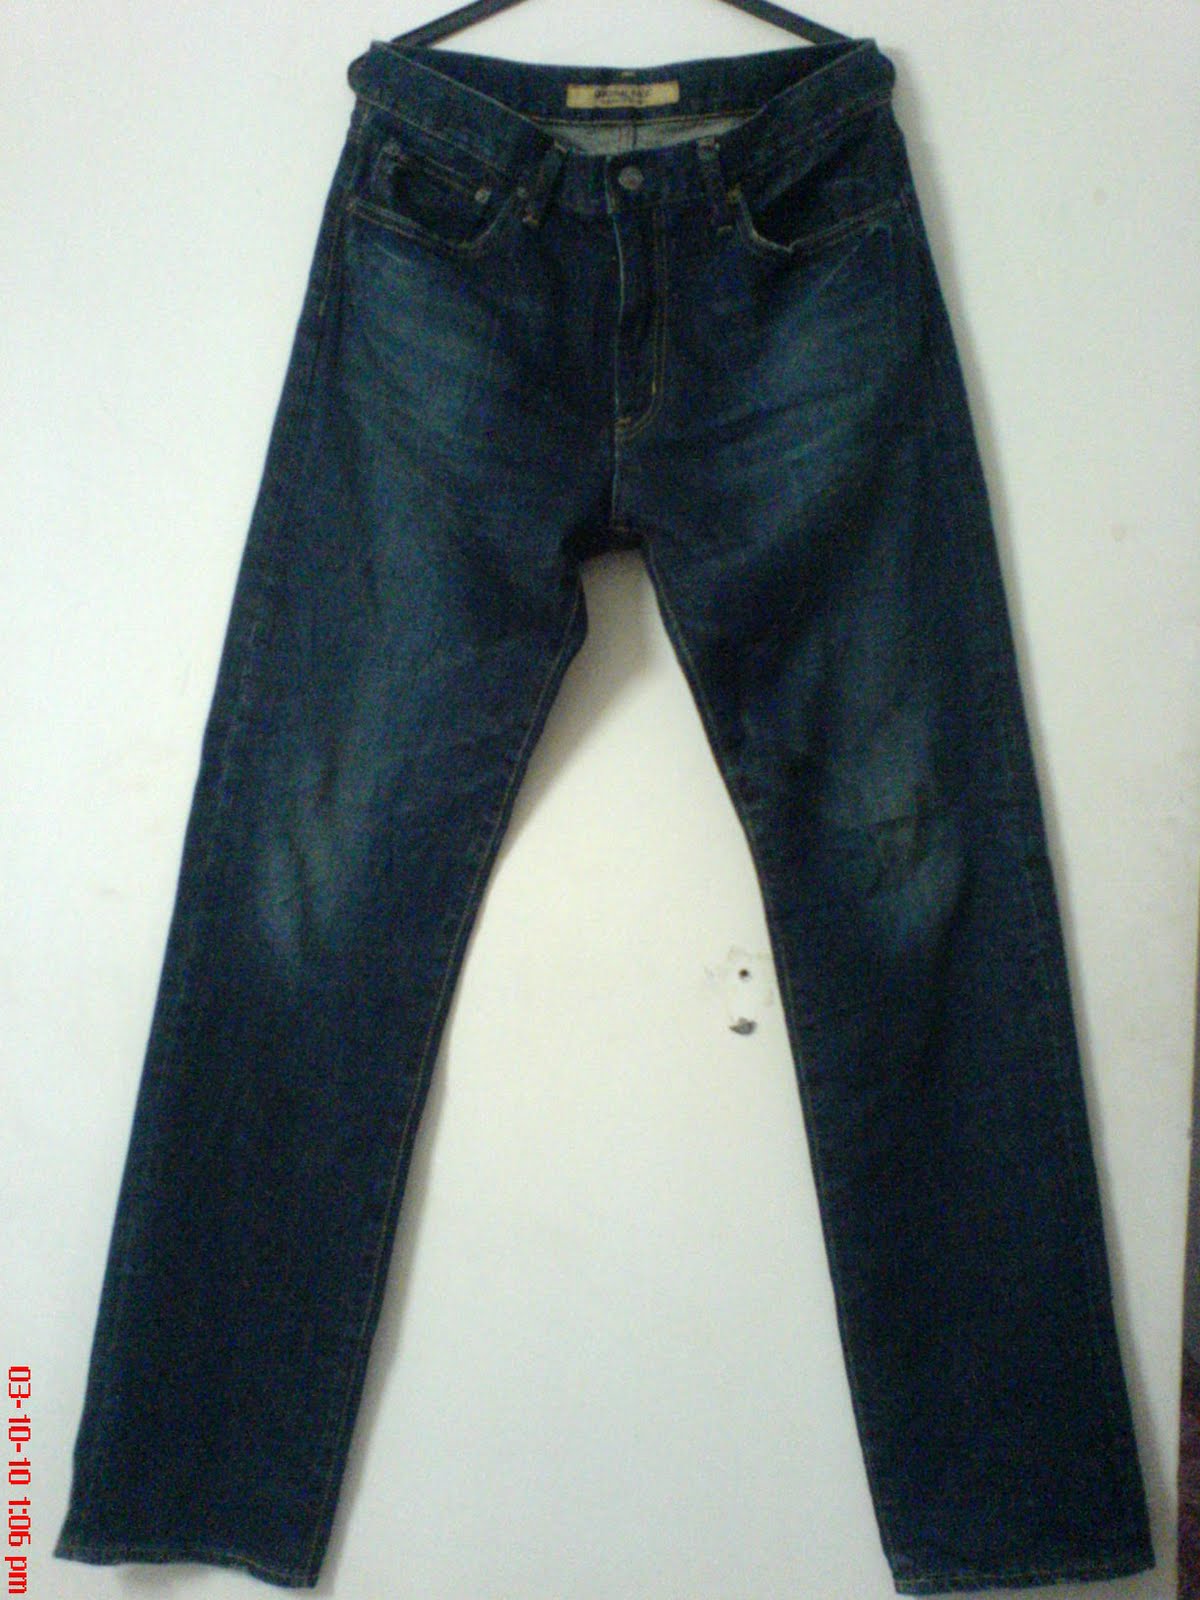 PLANET VINTAGE: Jeans uniqlo S-002 Original Basic (SOLD)